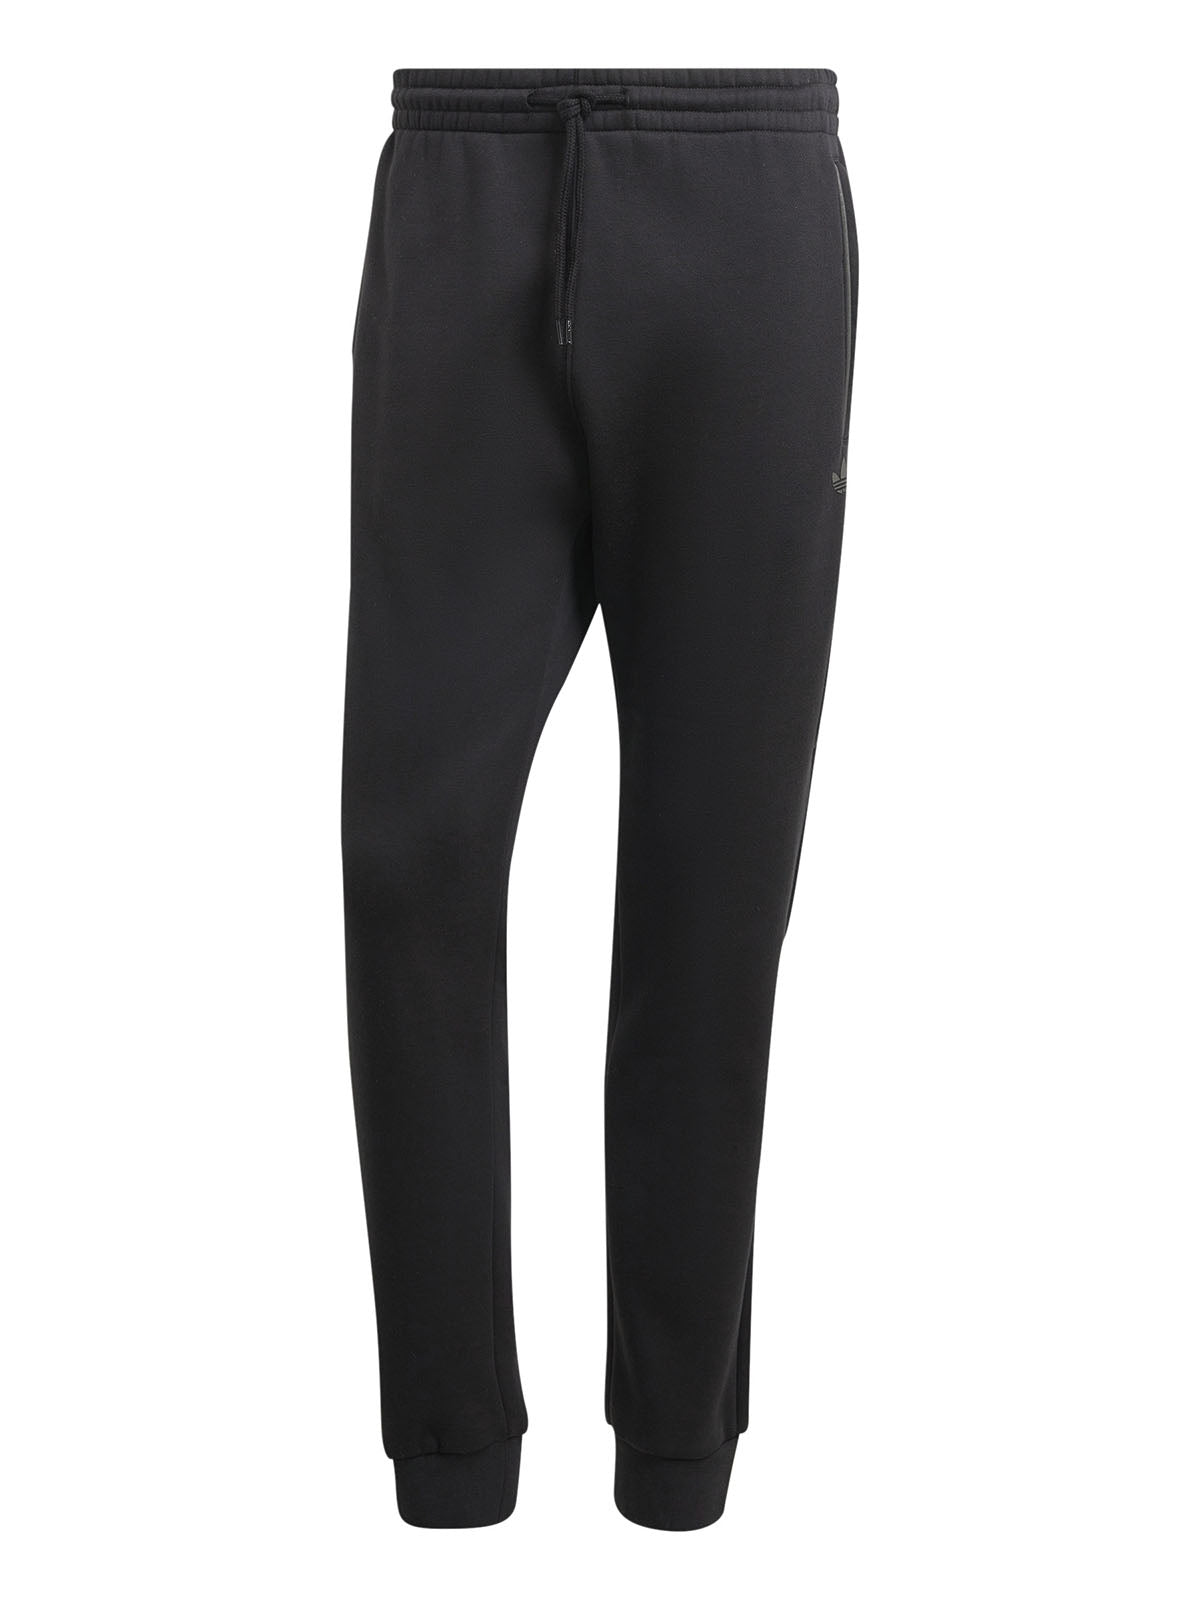 Pantaloni Uomo Adidas - Adicolor Seasonal Reflective Sweat Pants - Nero